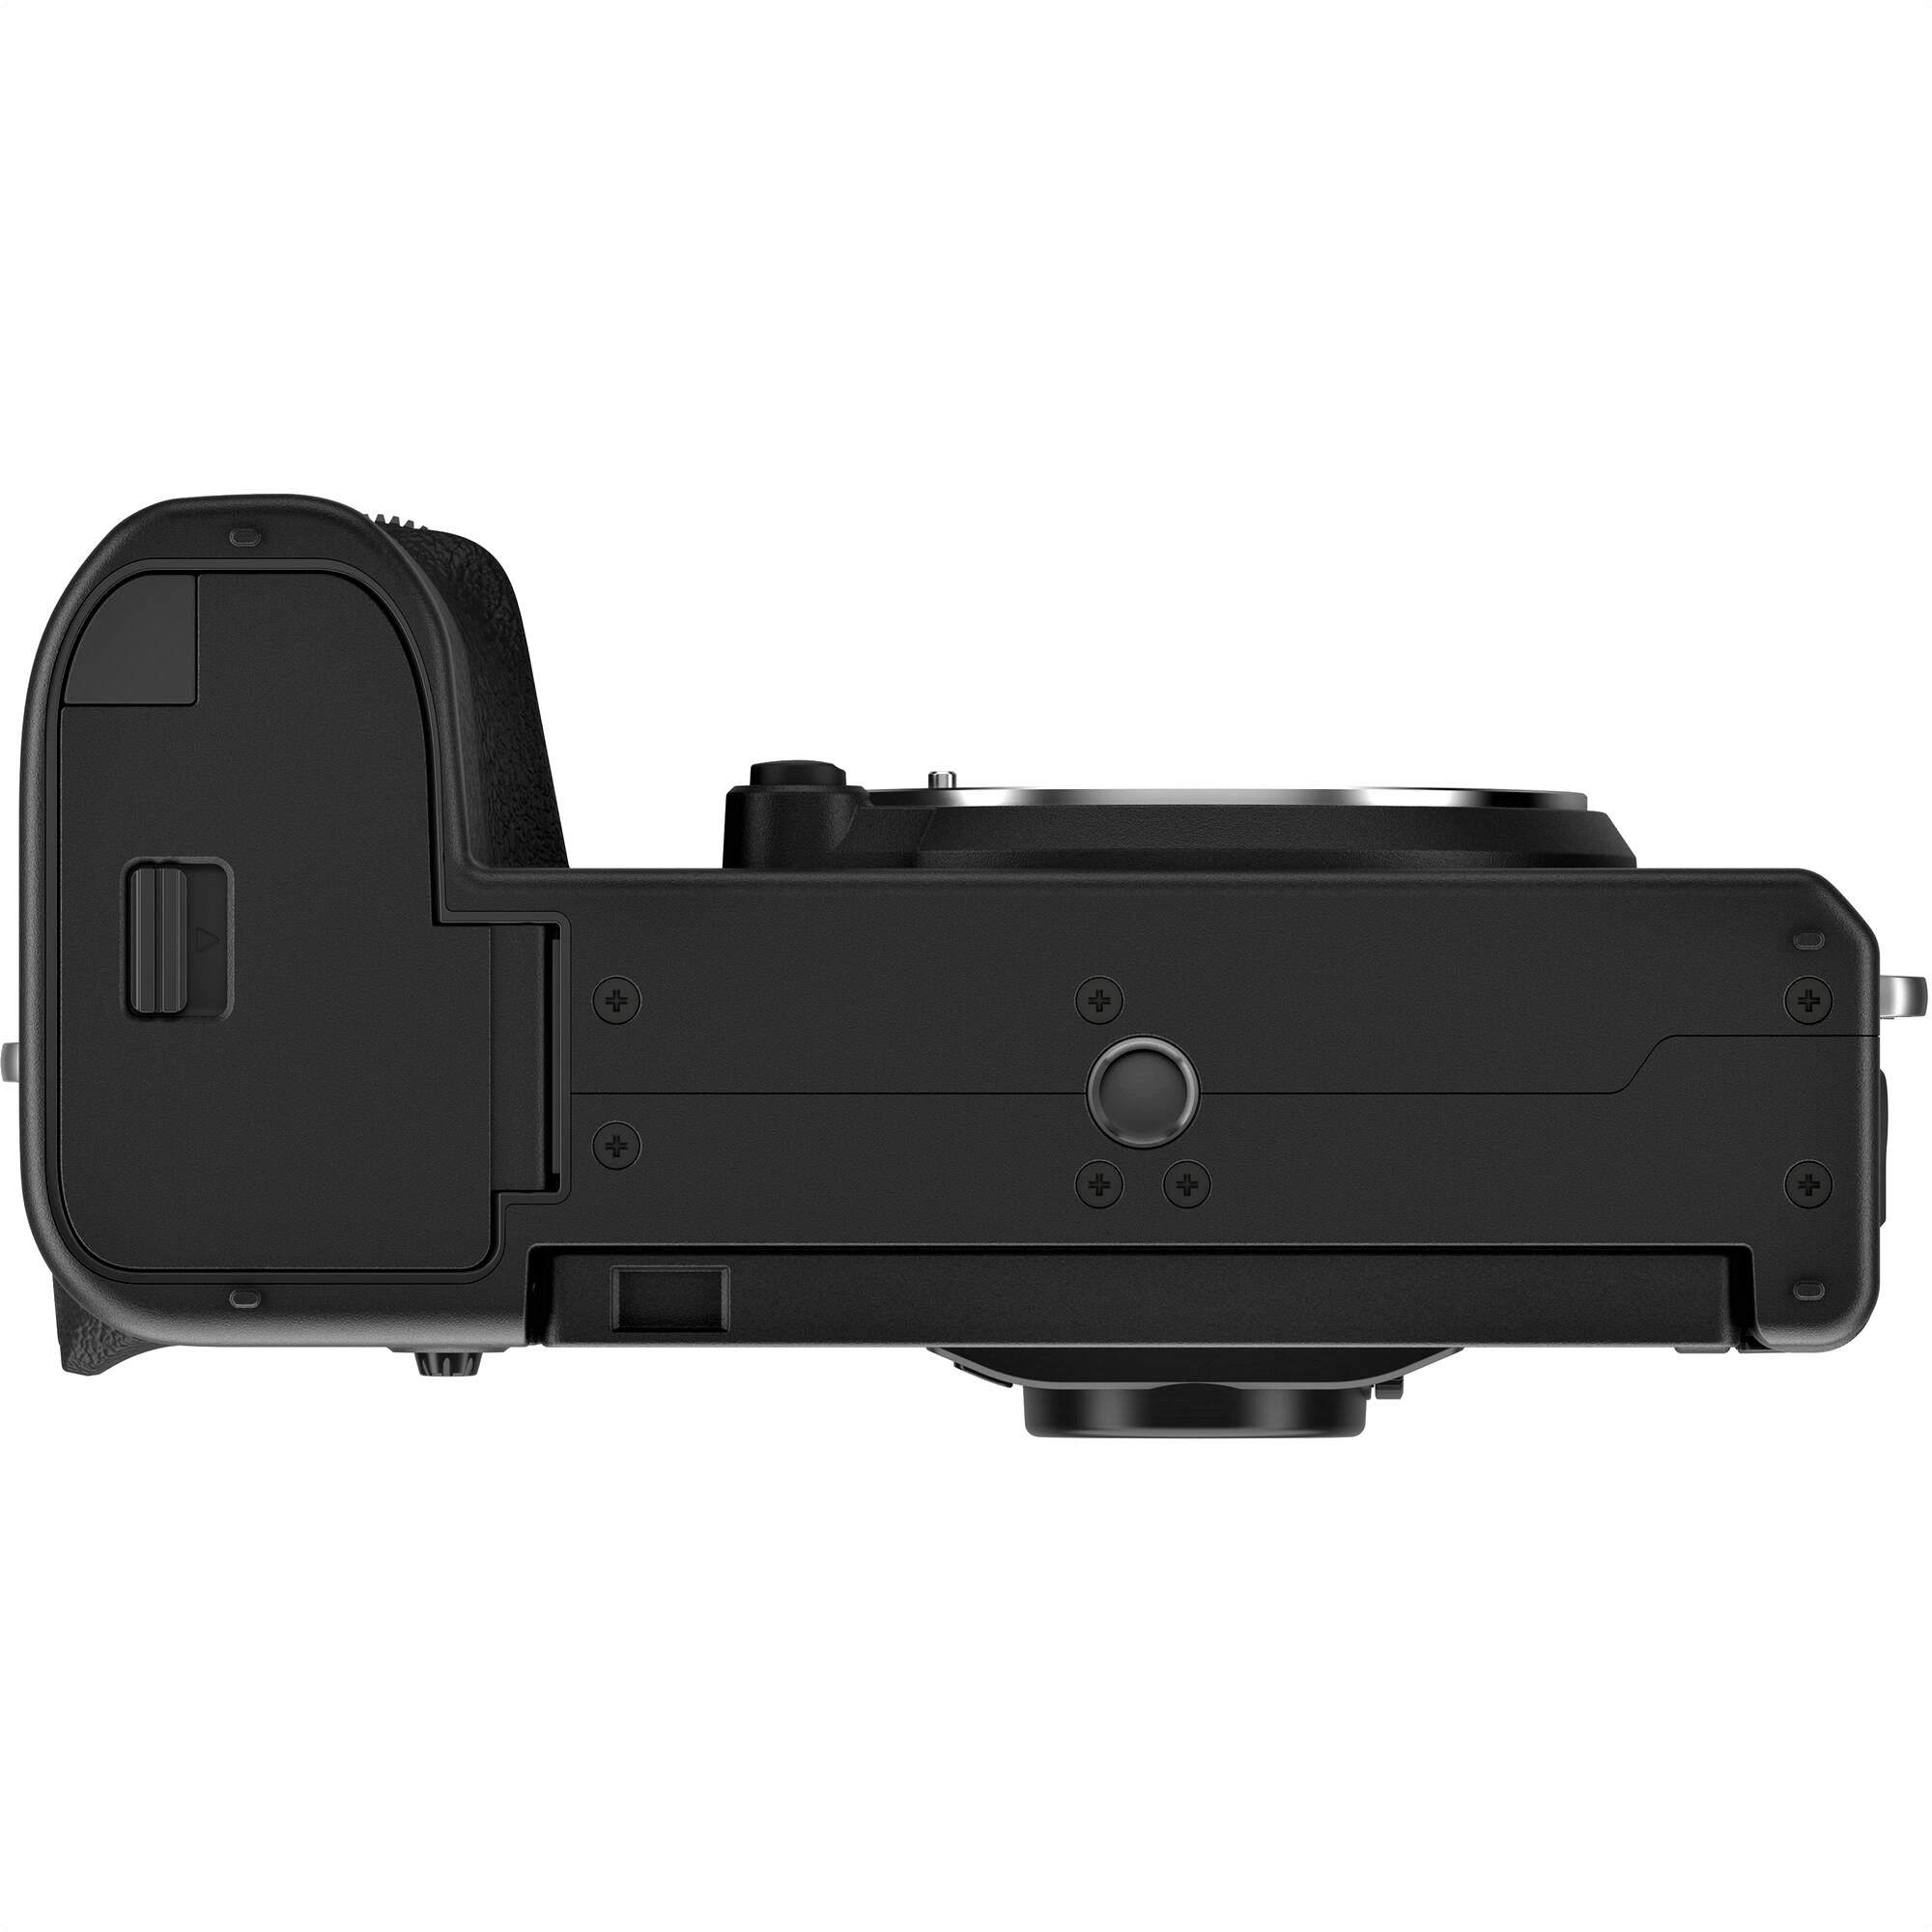 FUJIFILM X-S20 Mirrorless Camera with 15-45mm Lens (Black) - Bottom View